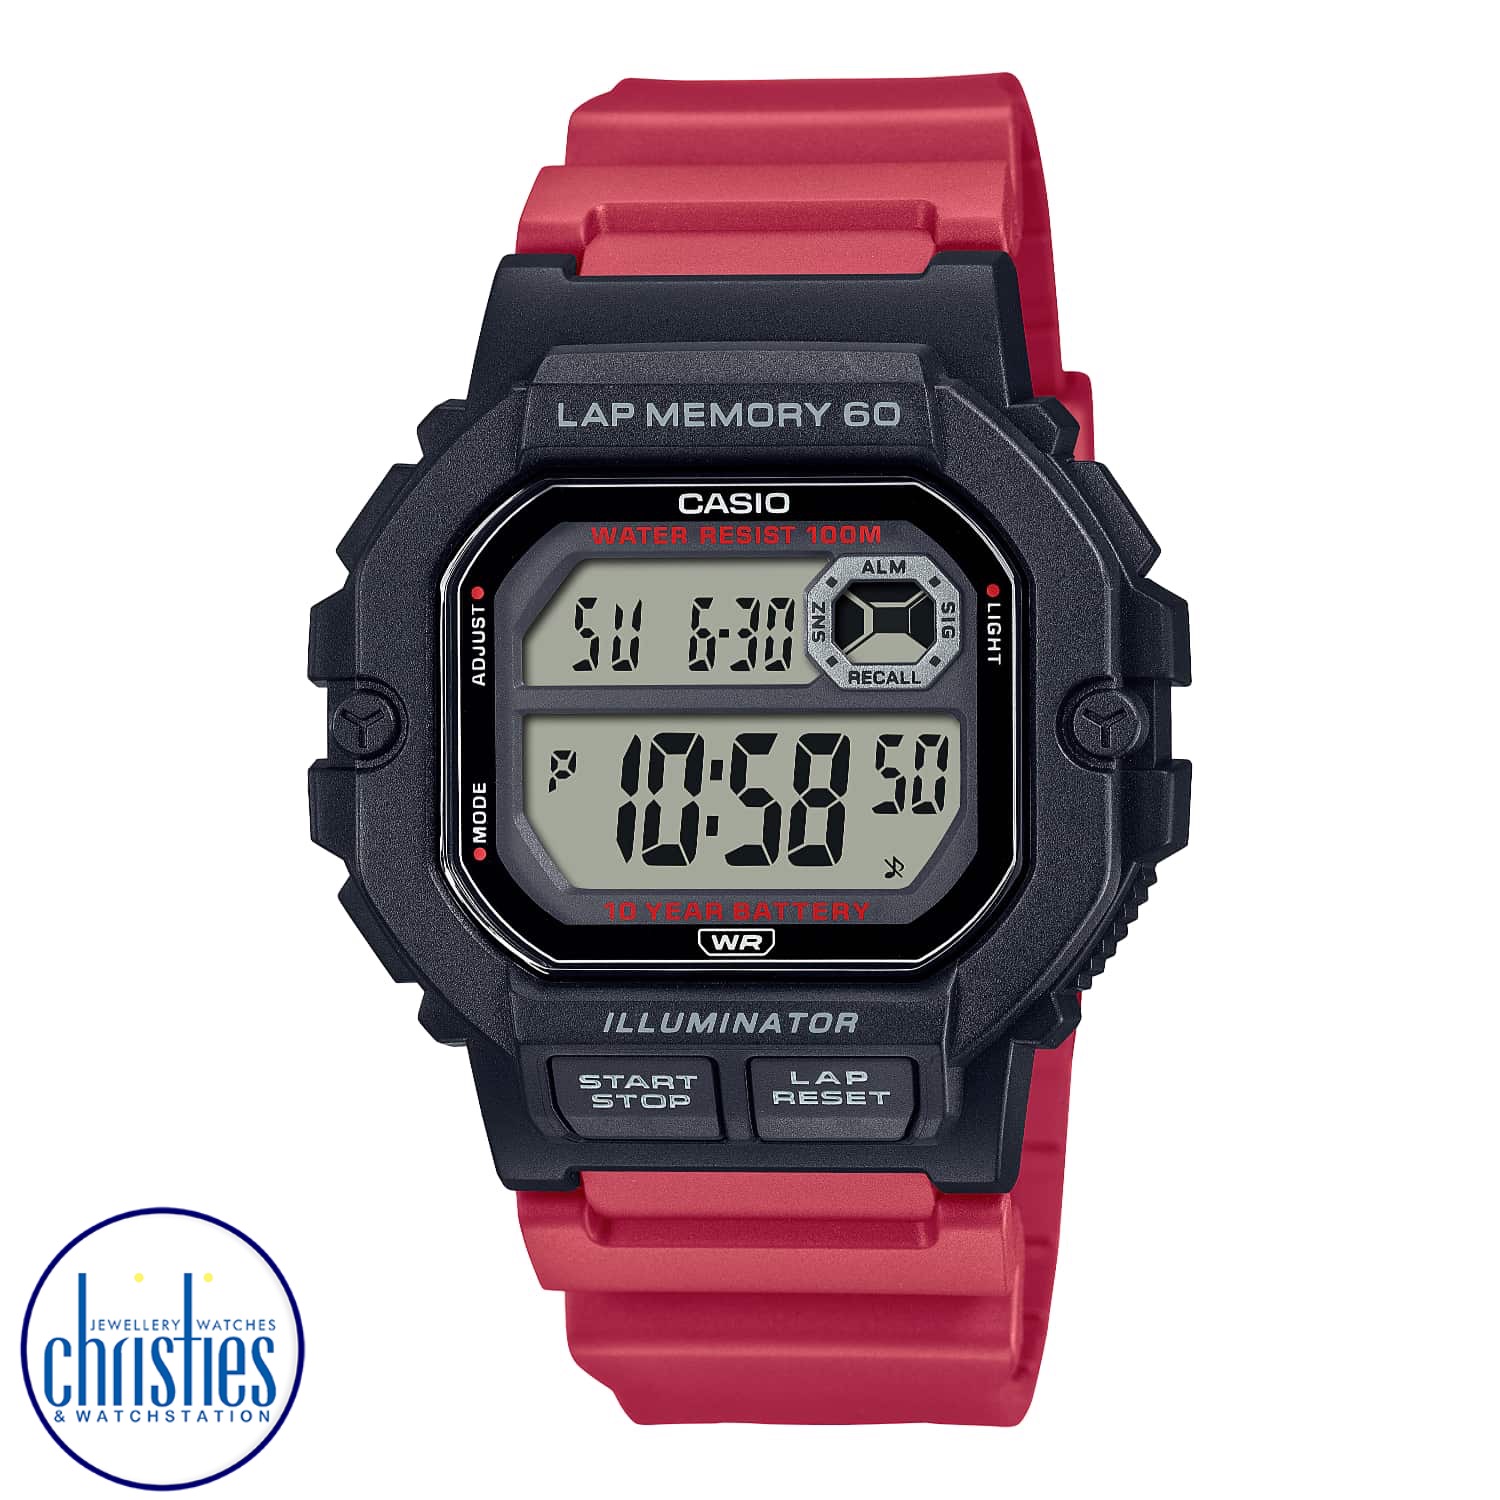 WS1400H-4A Casio 60 Lap Memory Sports Watch cheap casio watches nz